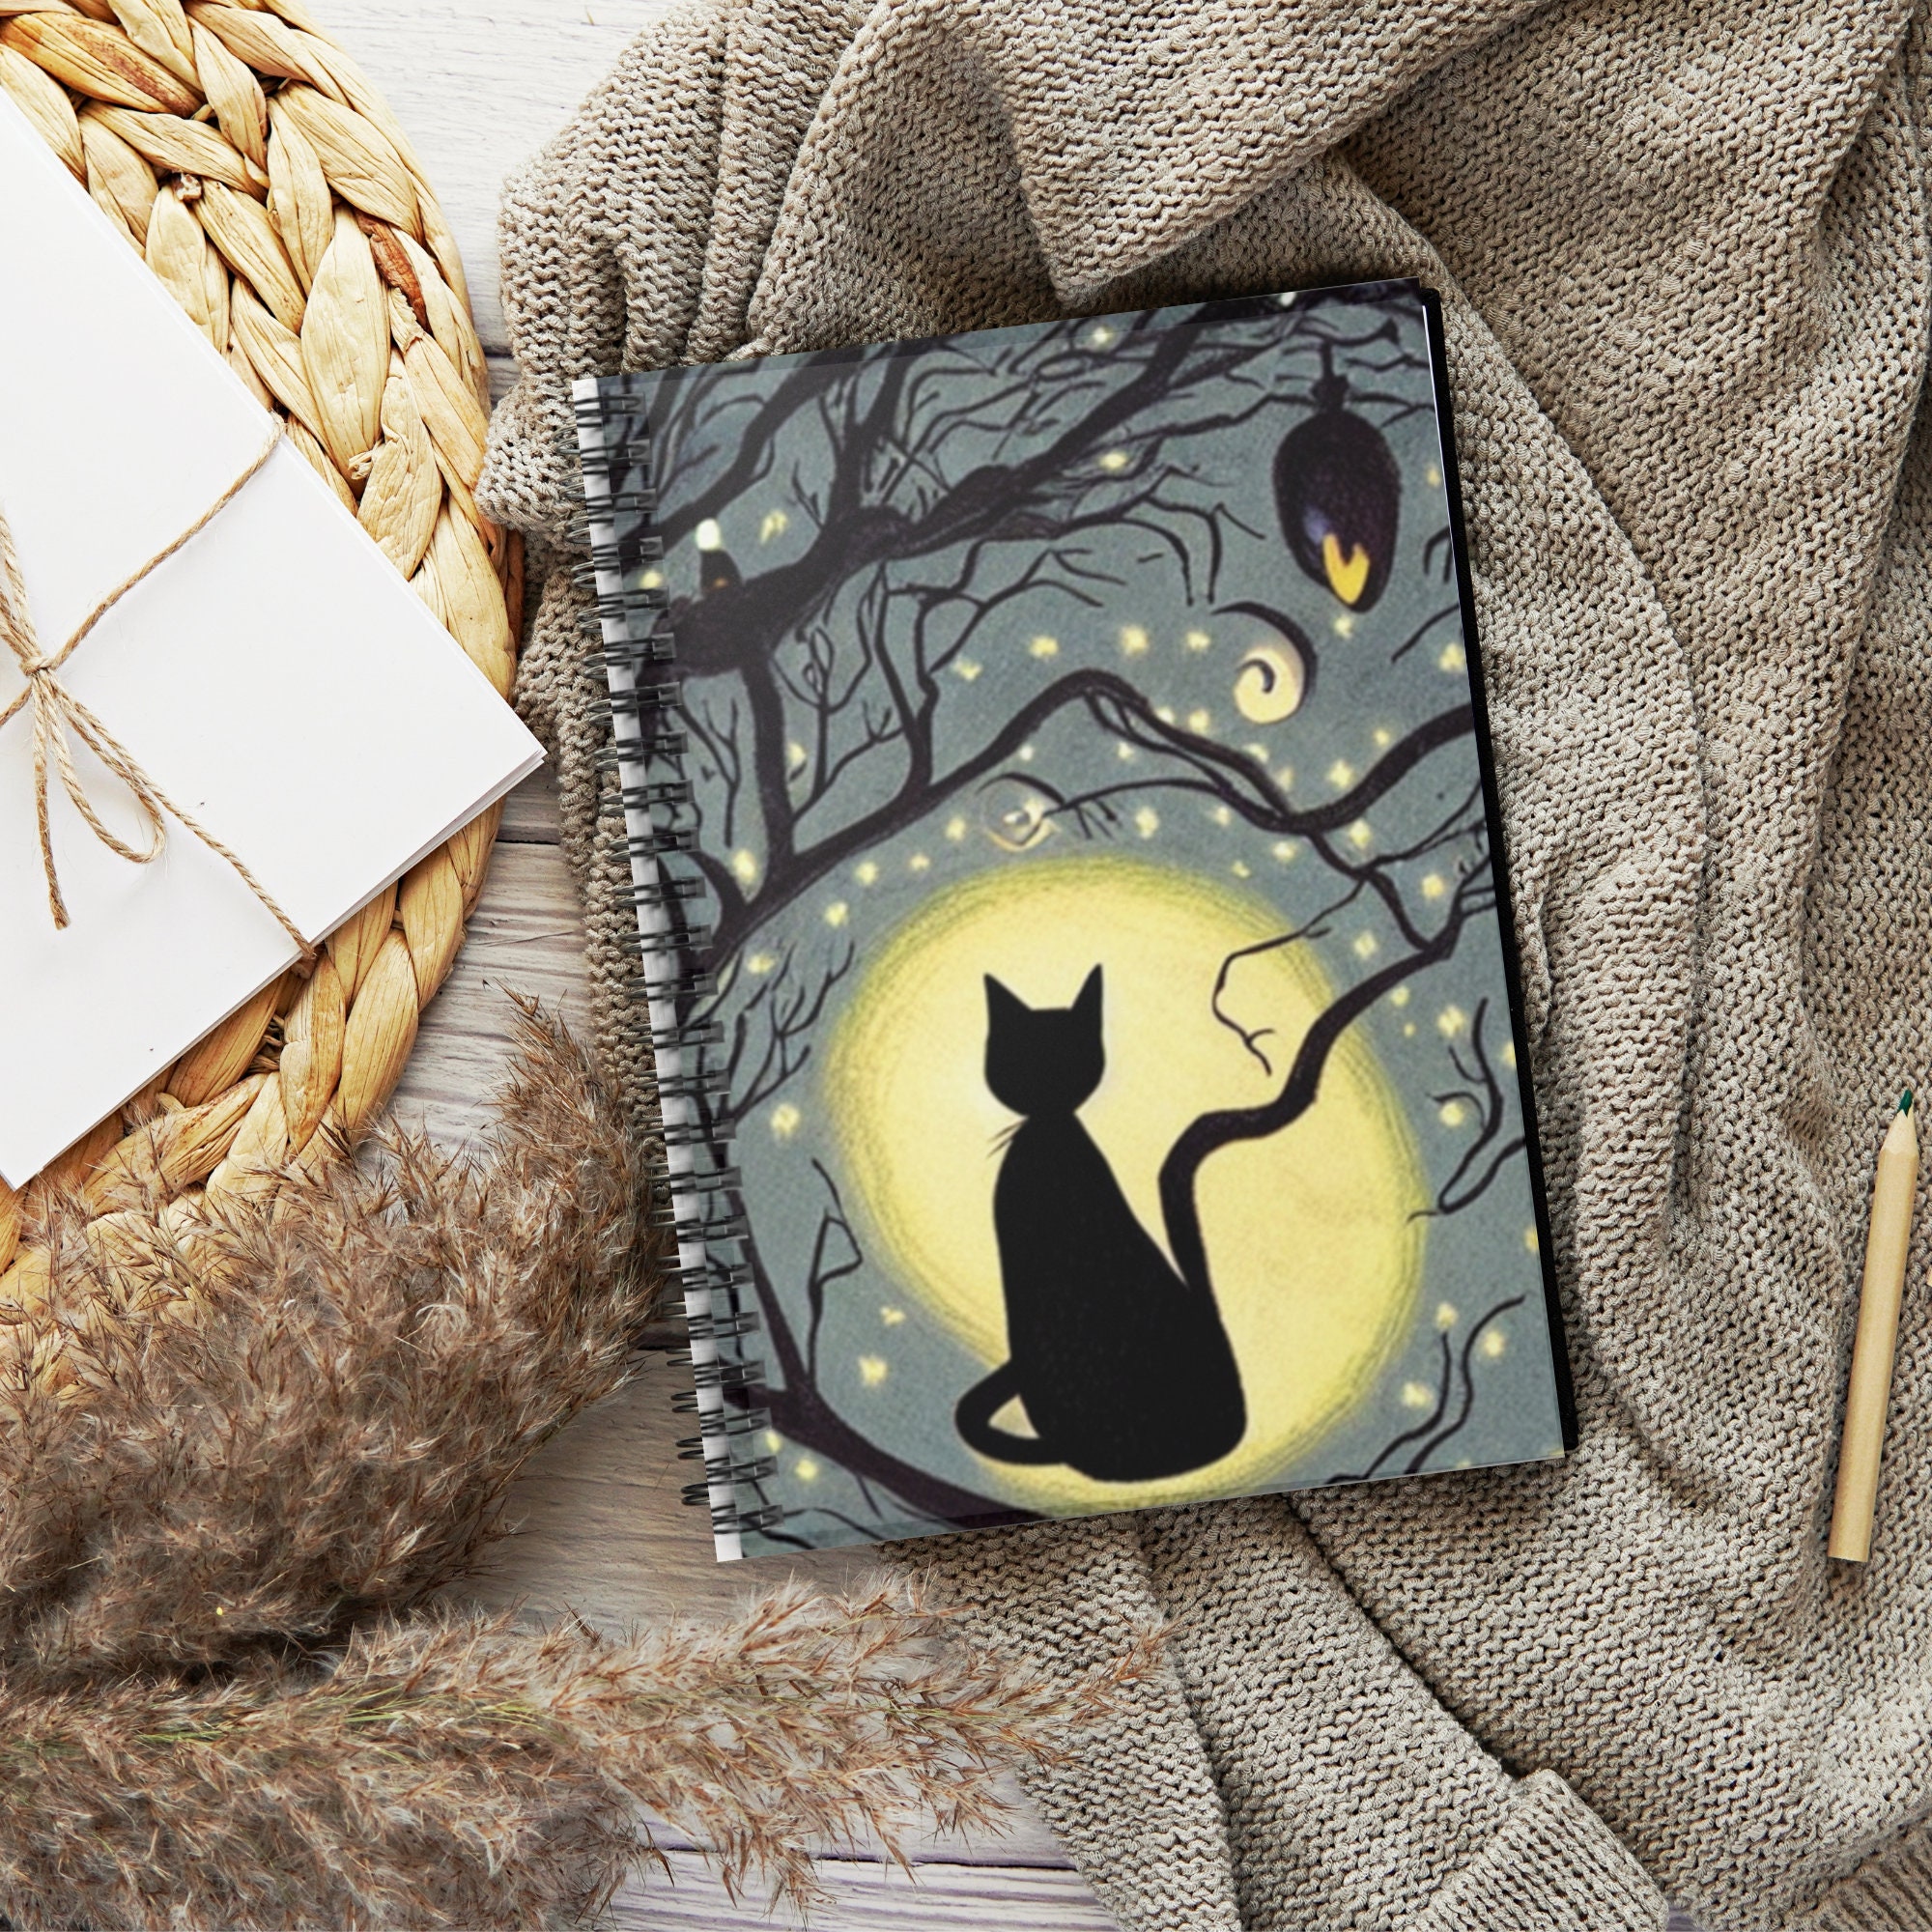 Moon cat journal Spell Book of shadows Black cat celestial - Inspire Uplift